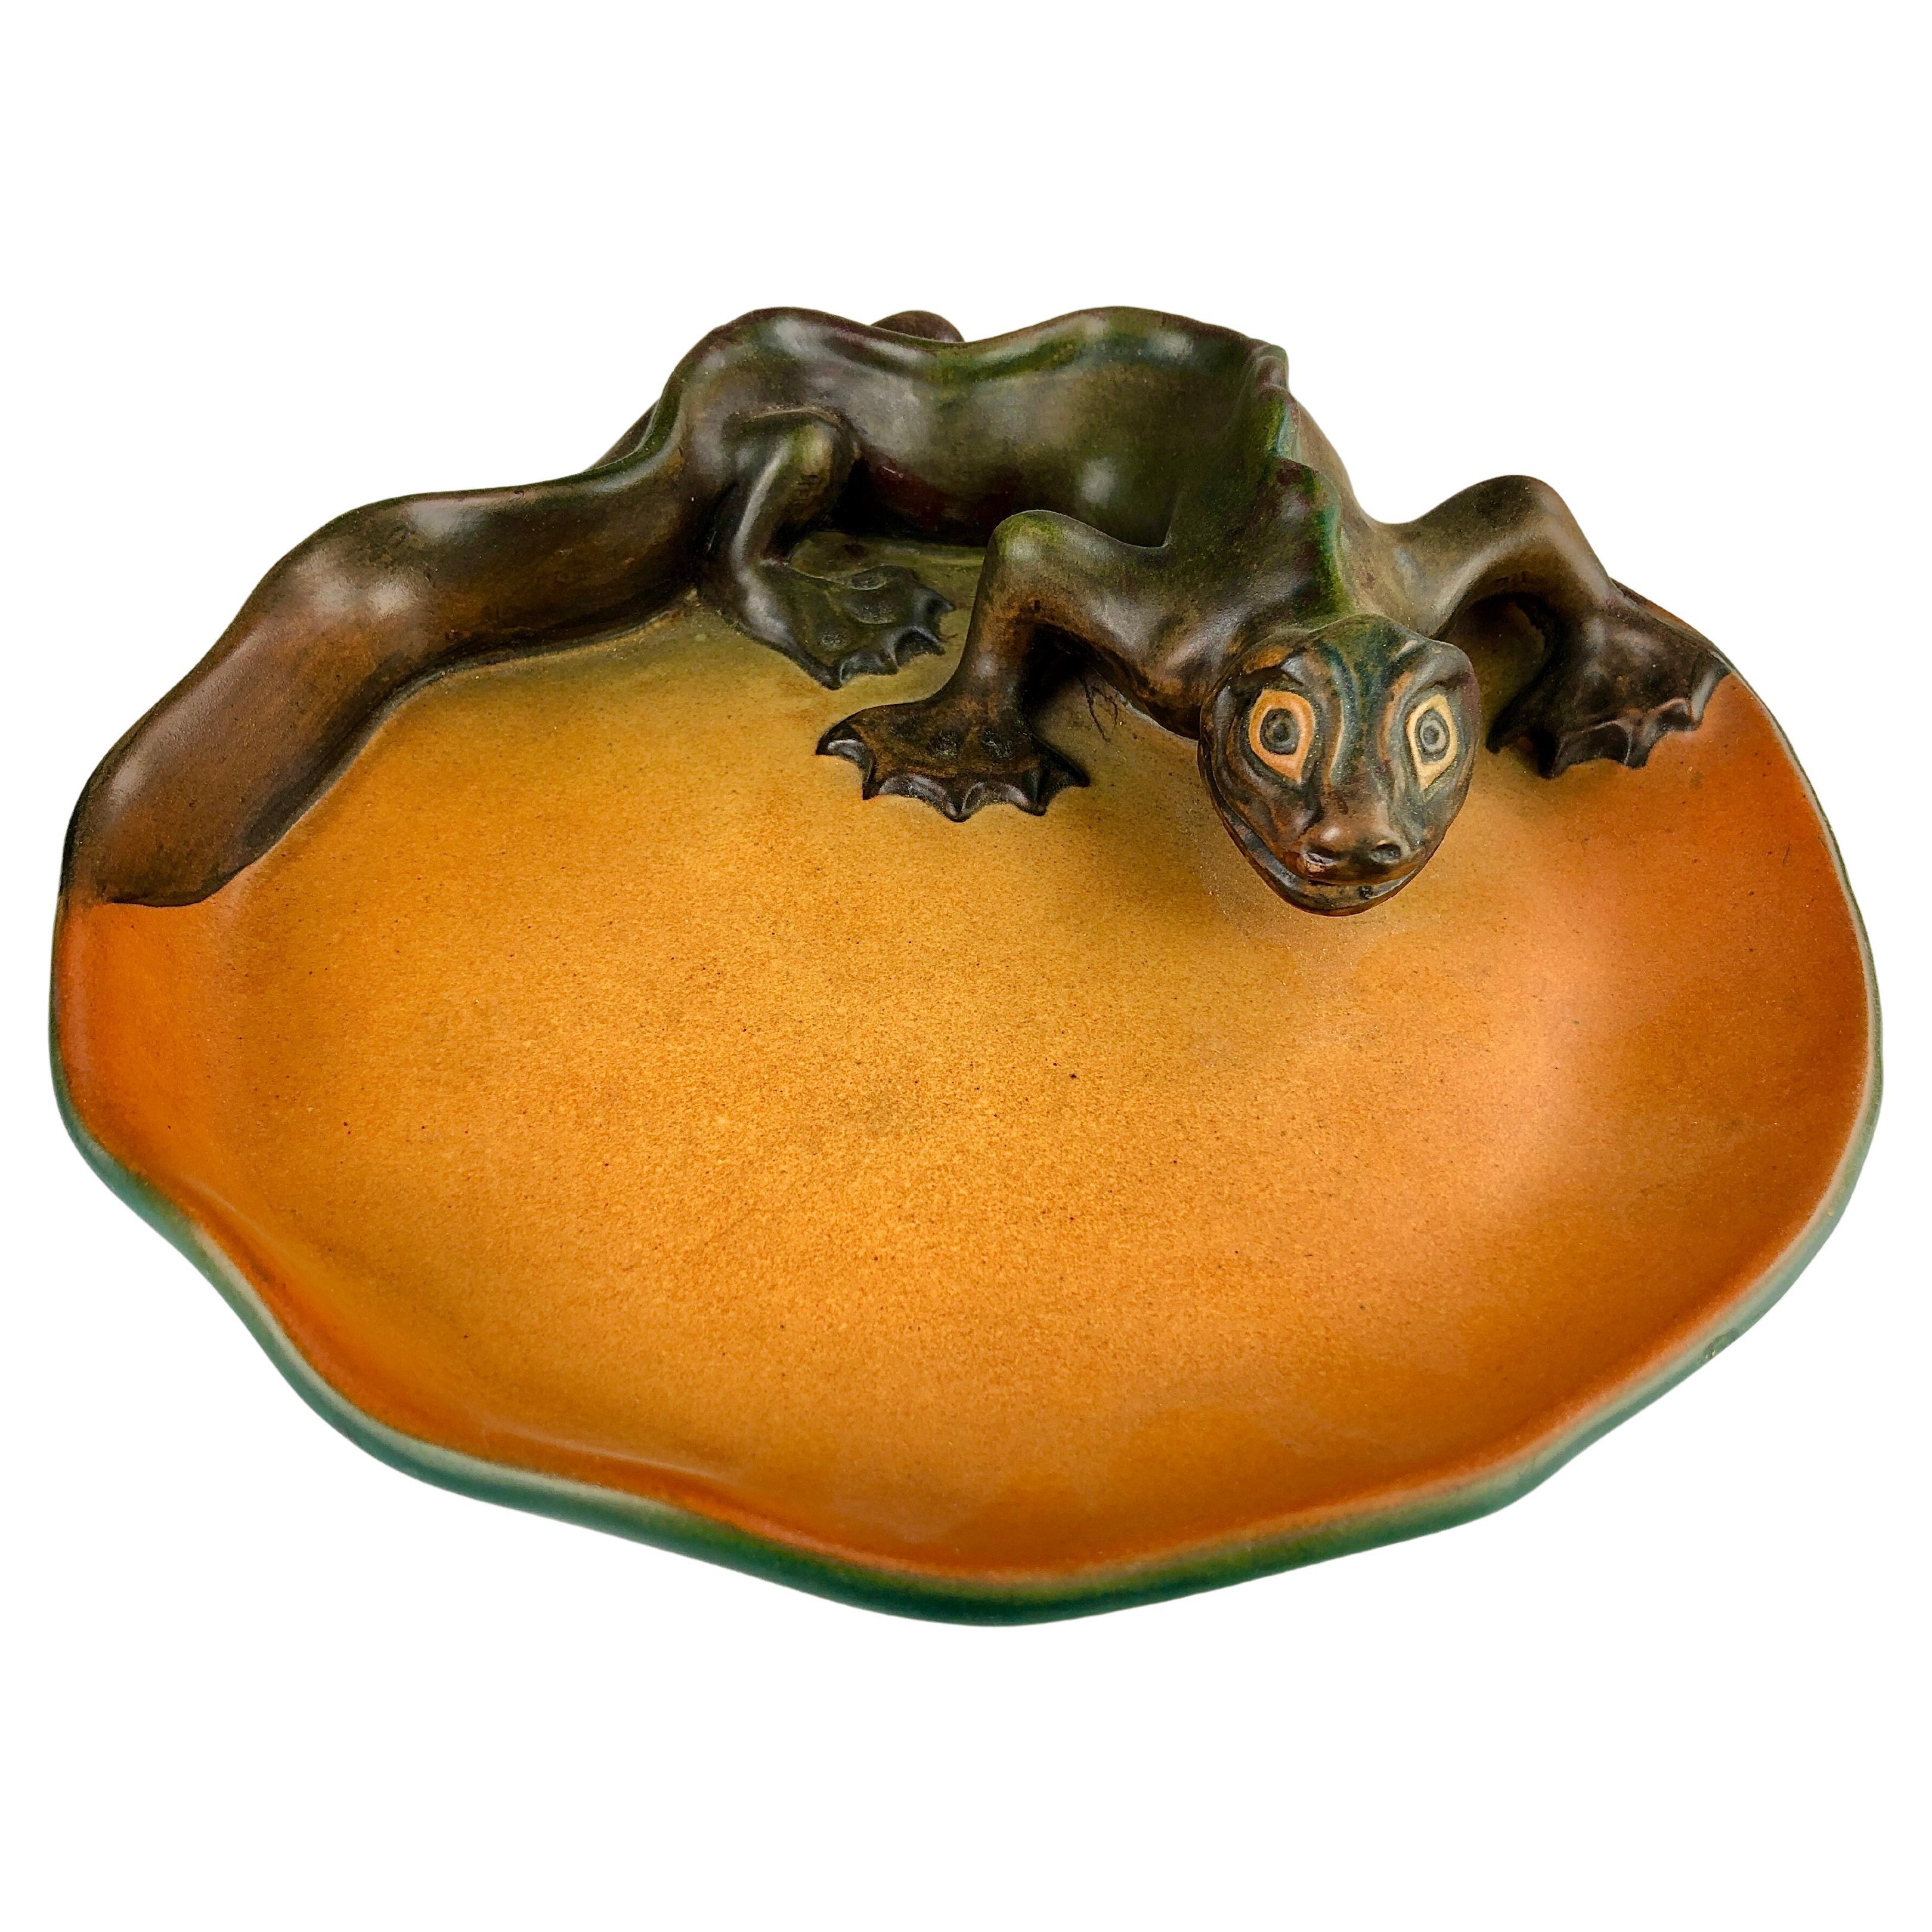 Danish Art Nouveau Lizard Ash Tray / Bowl by Axel Jensen for P. Ibsens Enke